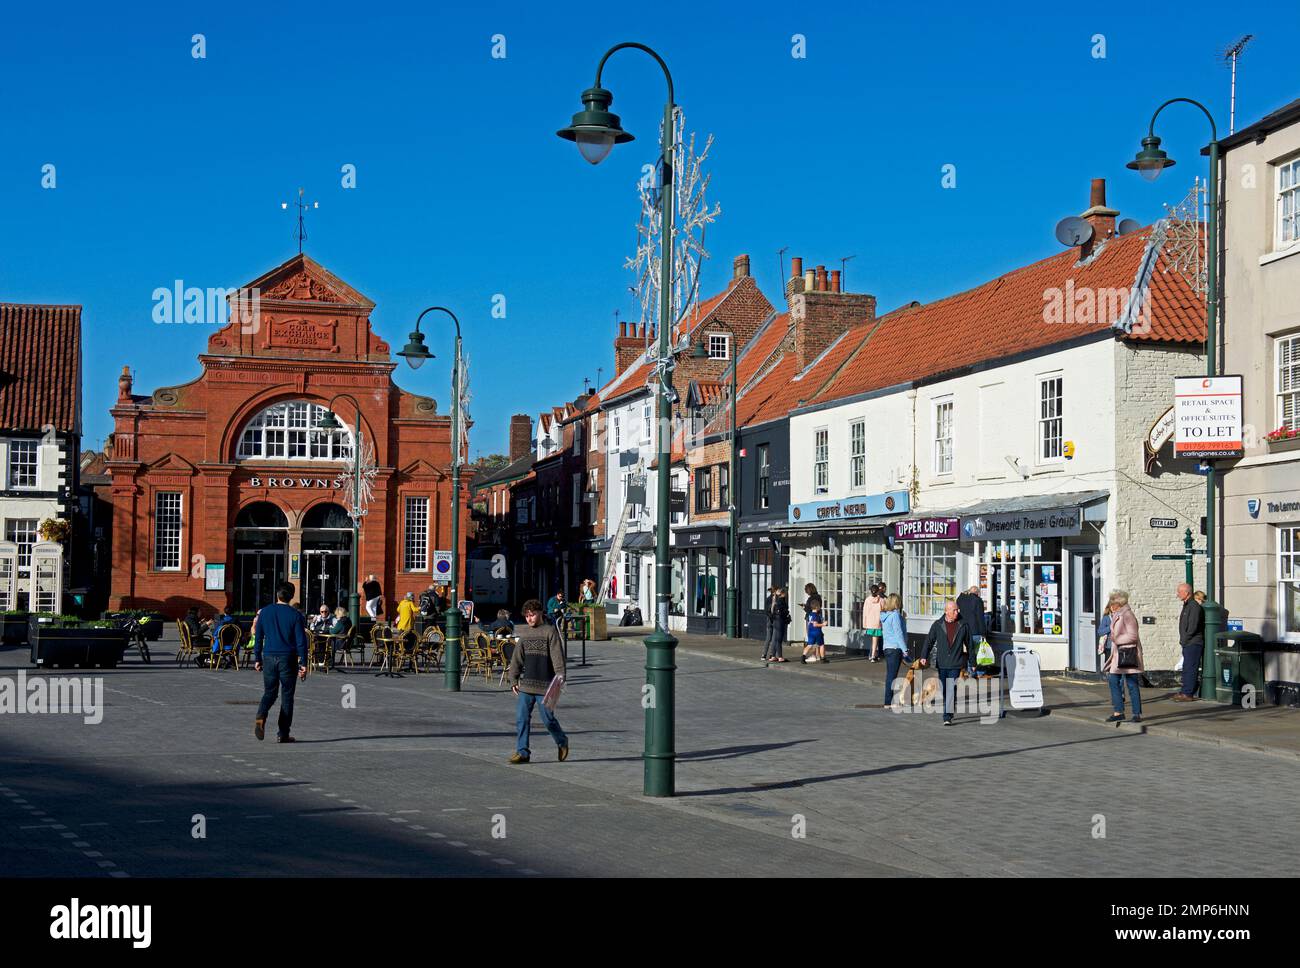 The market square, Beverley, East Yorkshire, England UK Stock Photo